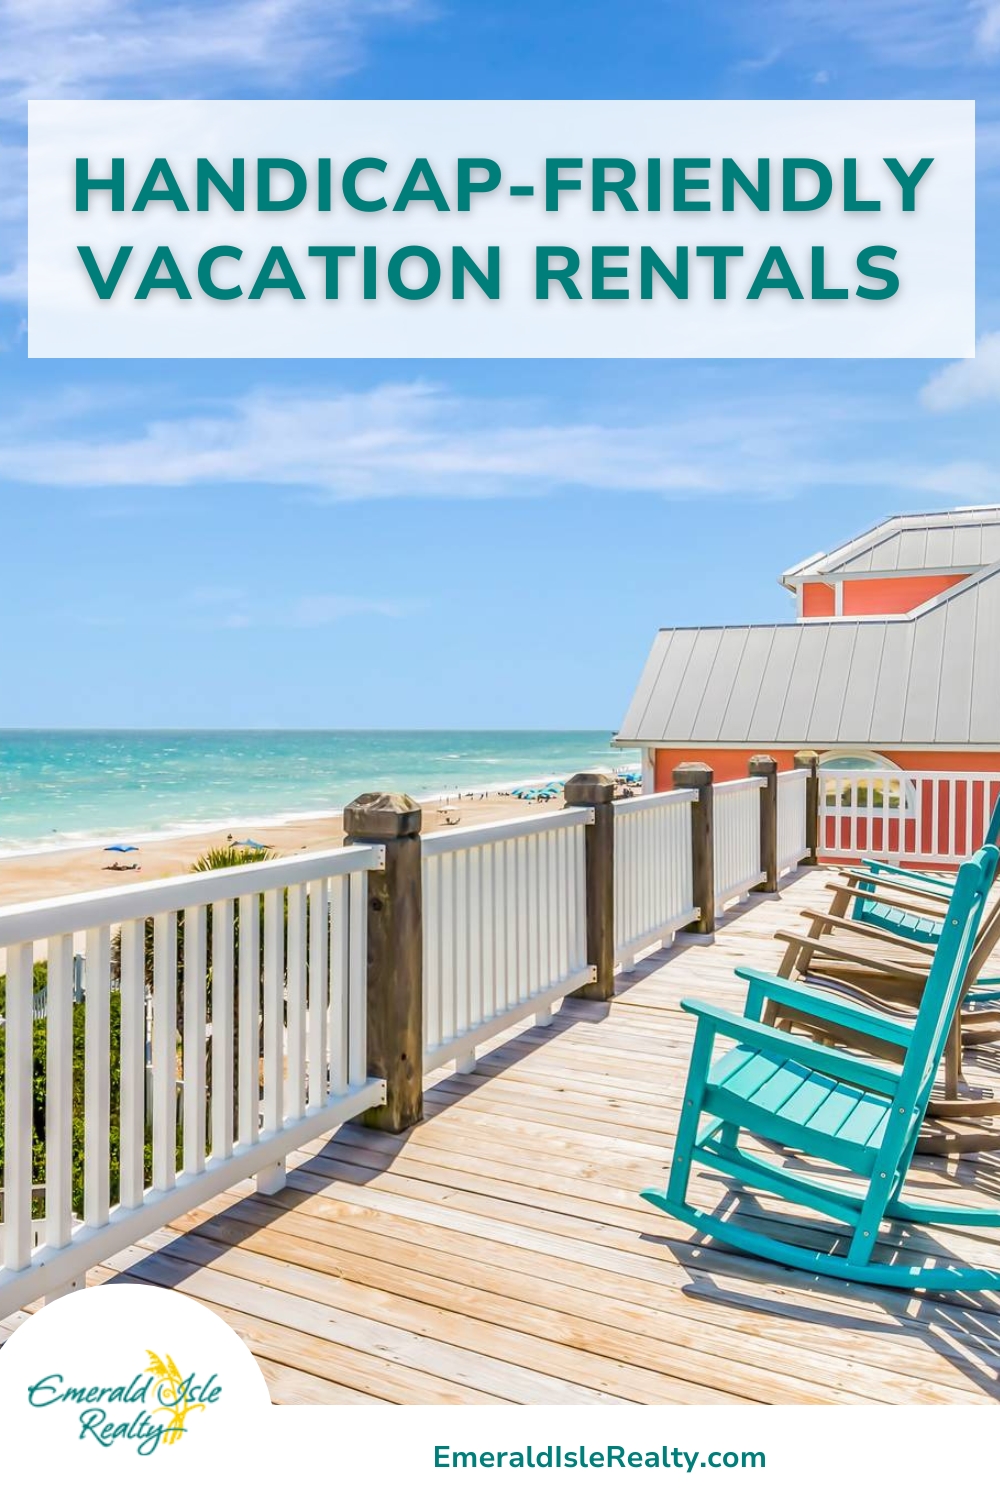 Handicap Friendly Vacation Rentals in Emerald Isle, NC